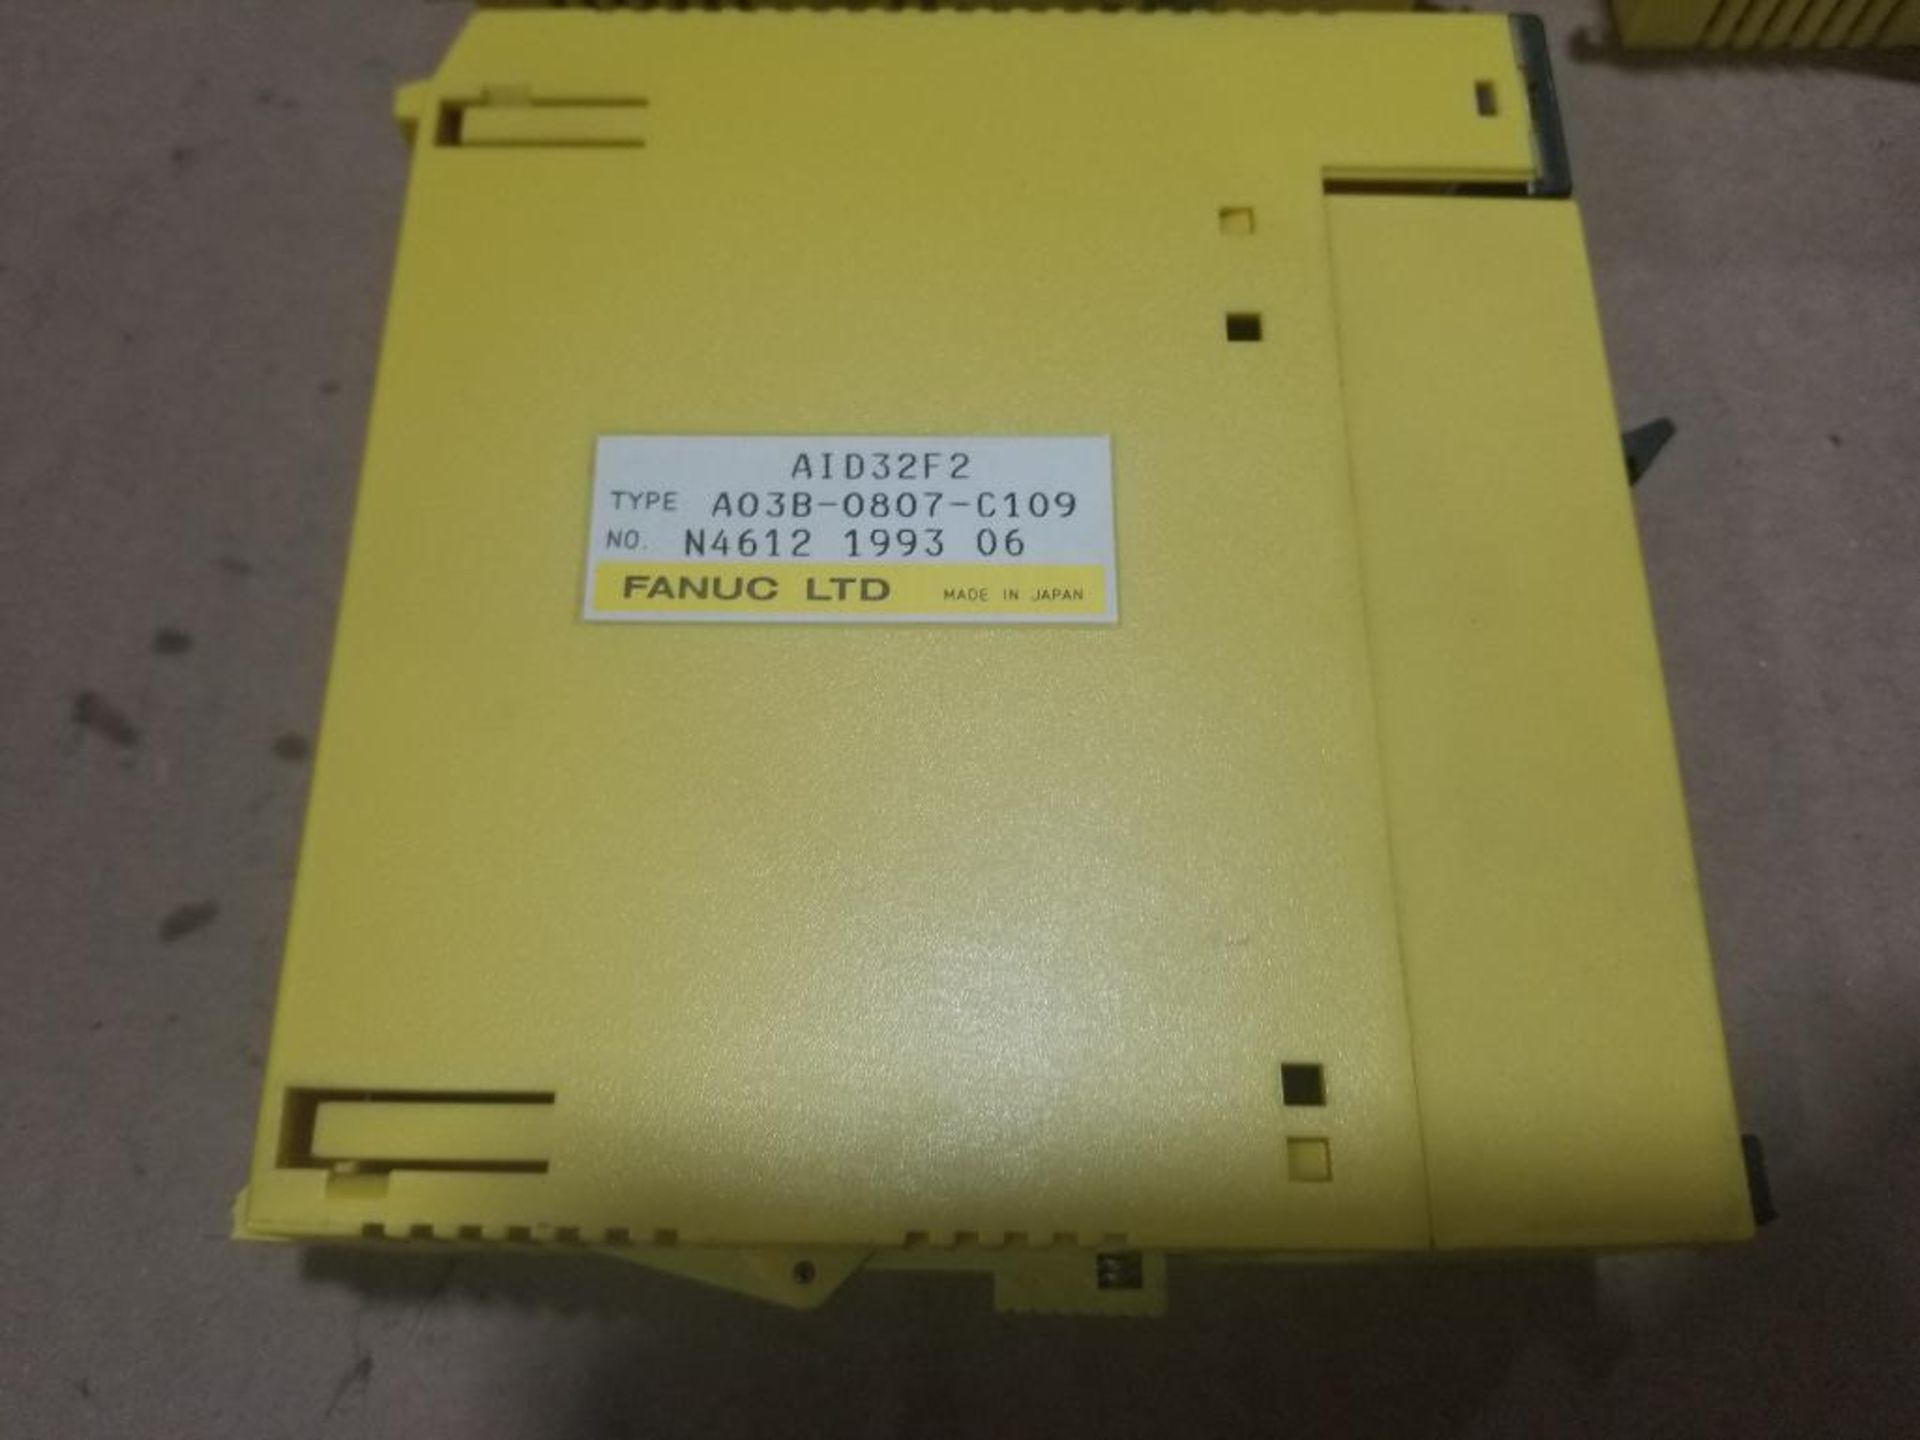 Qty 3 - Fanuc PLC cards. Part number A03B-0807-C109. - Image 2 of 5